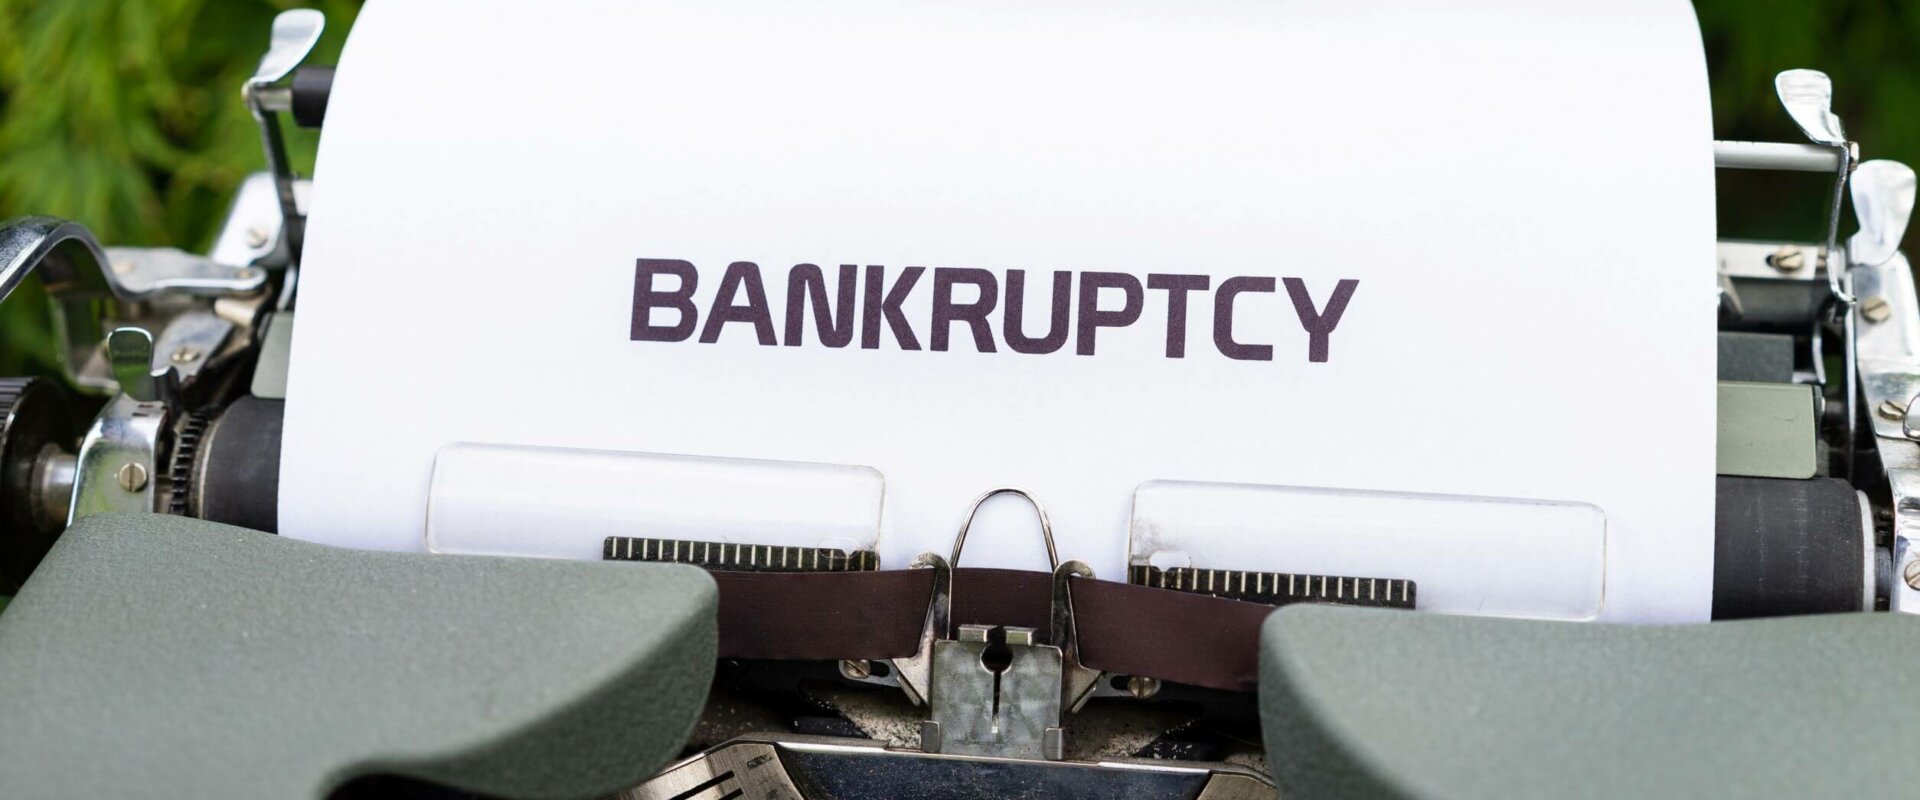 New bankruptcy resized